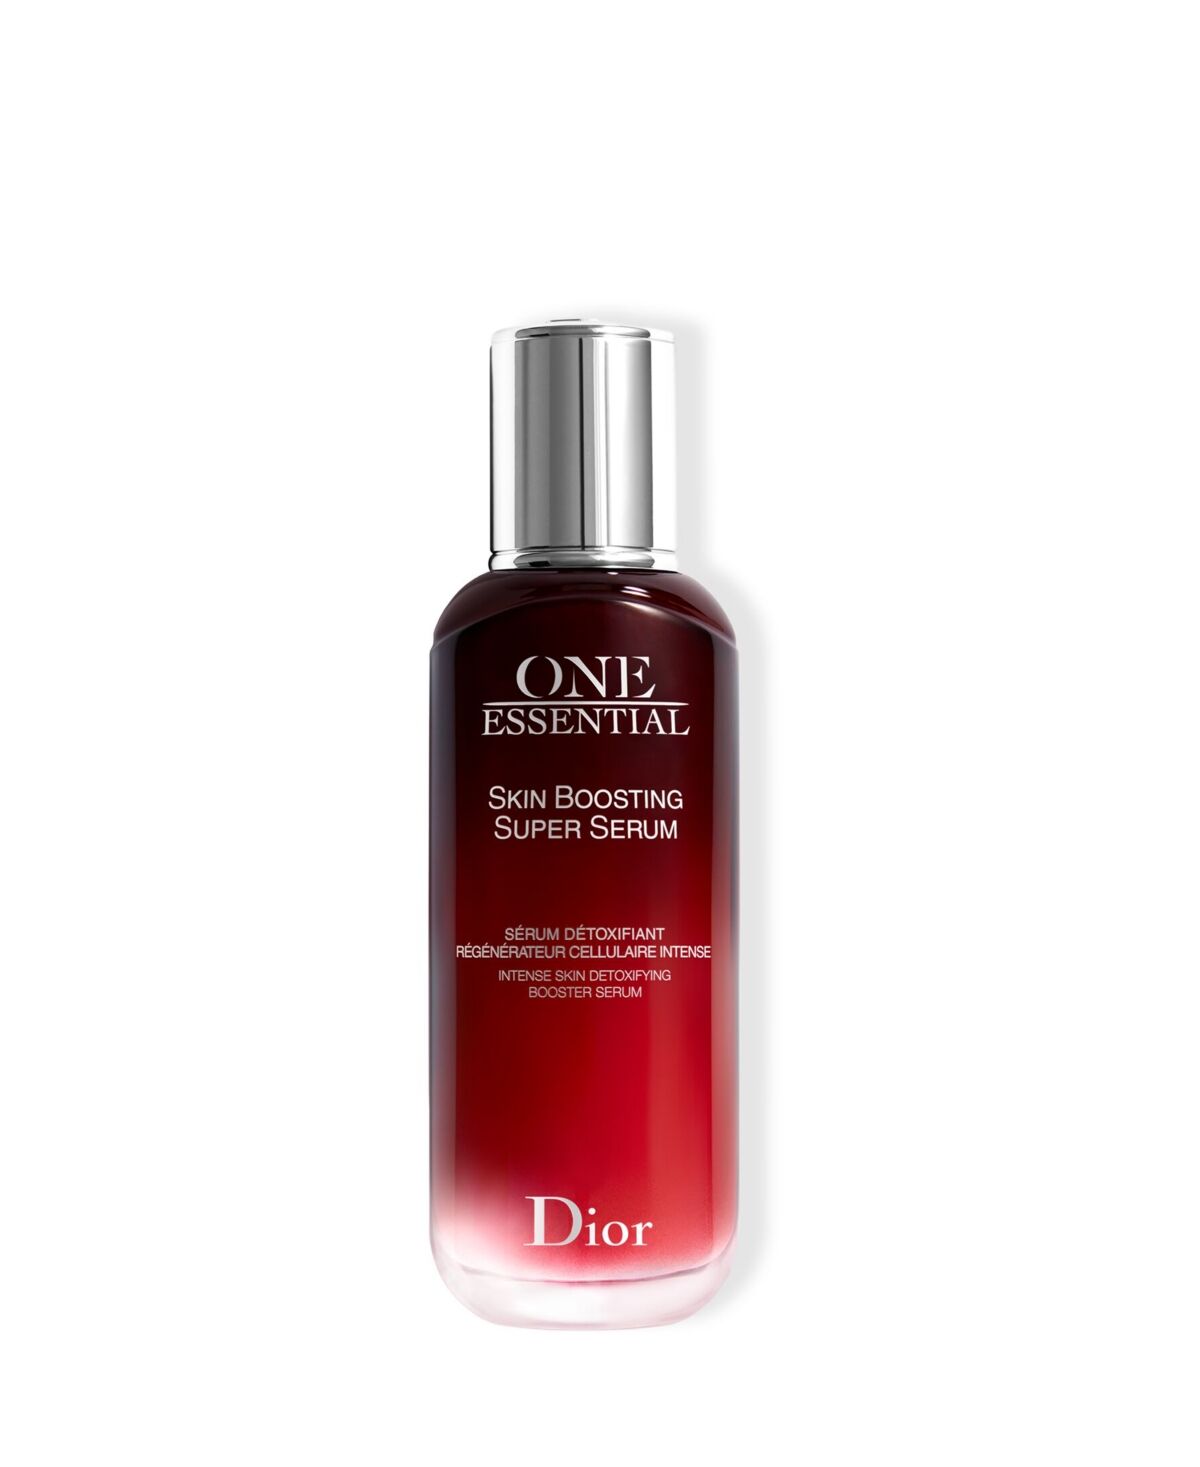 Christian Dior One Essential Skin Boosting Super Serum, 2.5 oz.